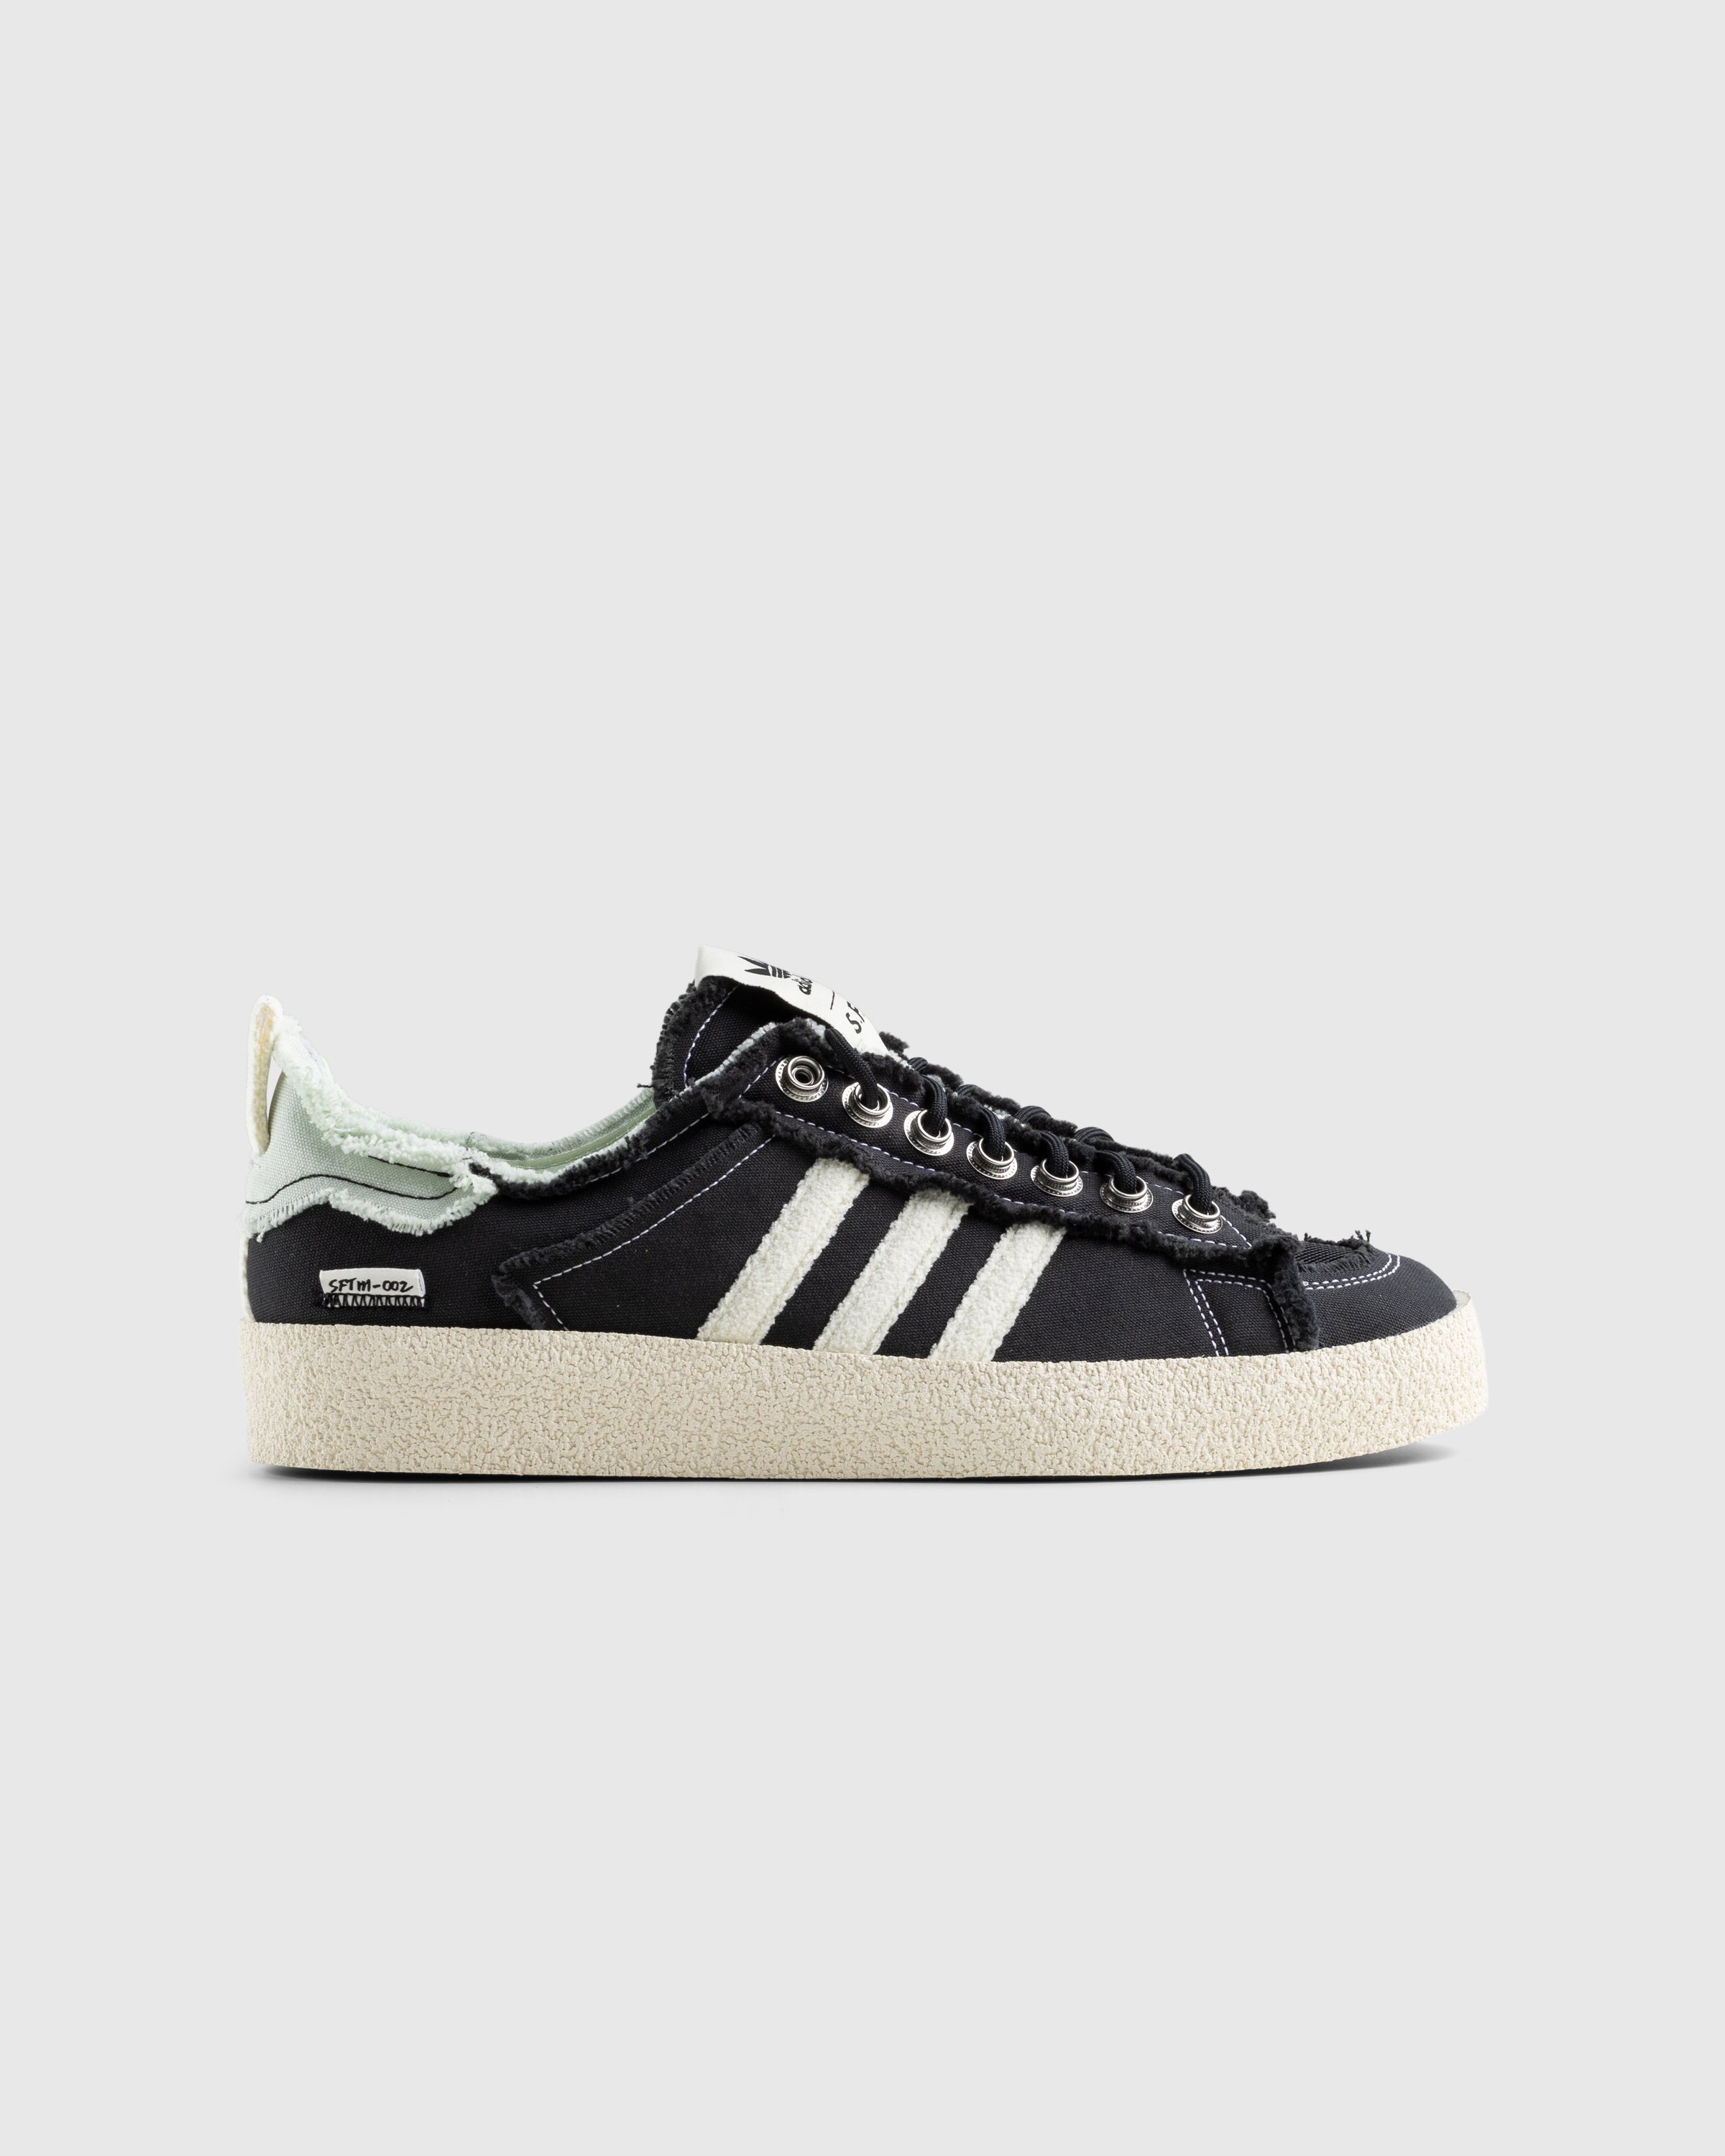 Adidas - CAMPUS 80s CBLACK/CWHITE/LINGRN - Footwear - Black - Image 1